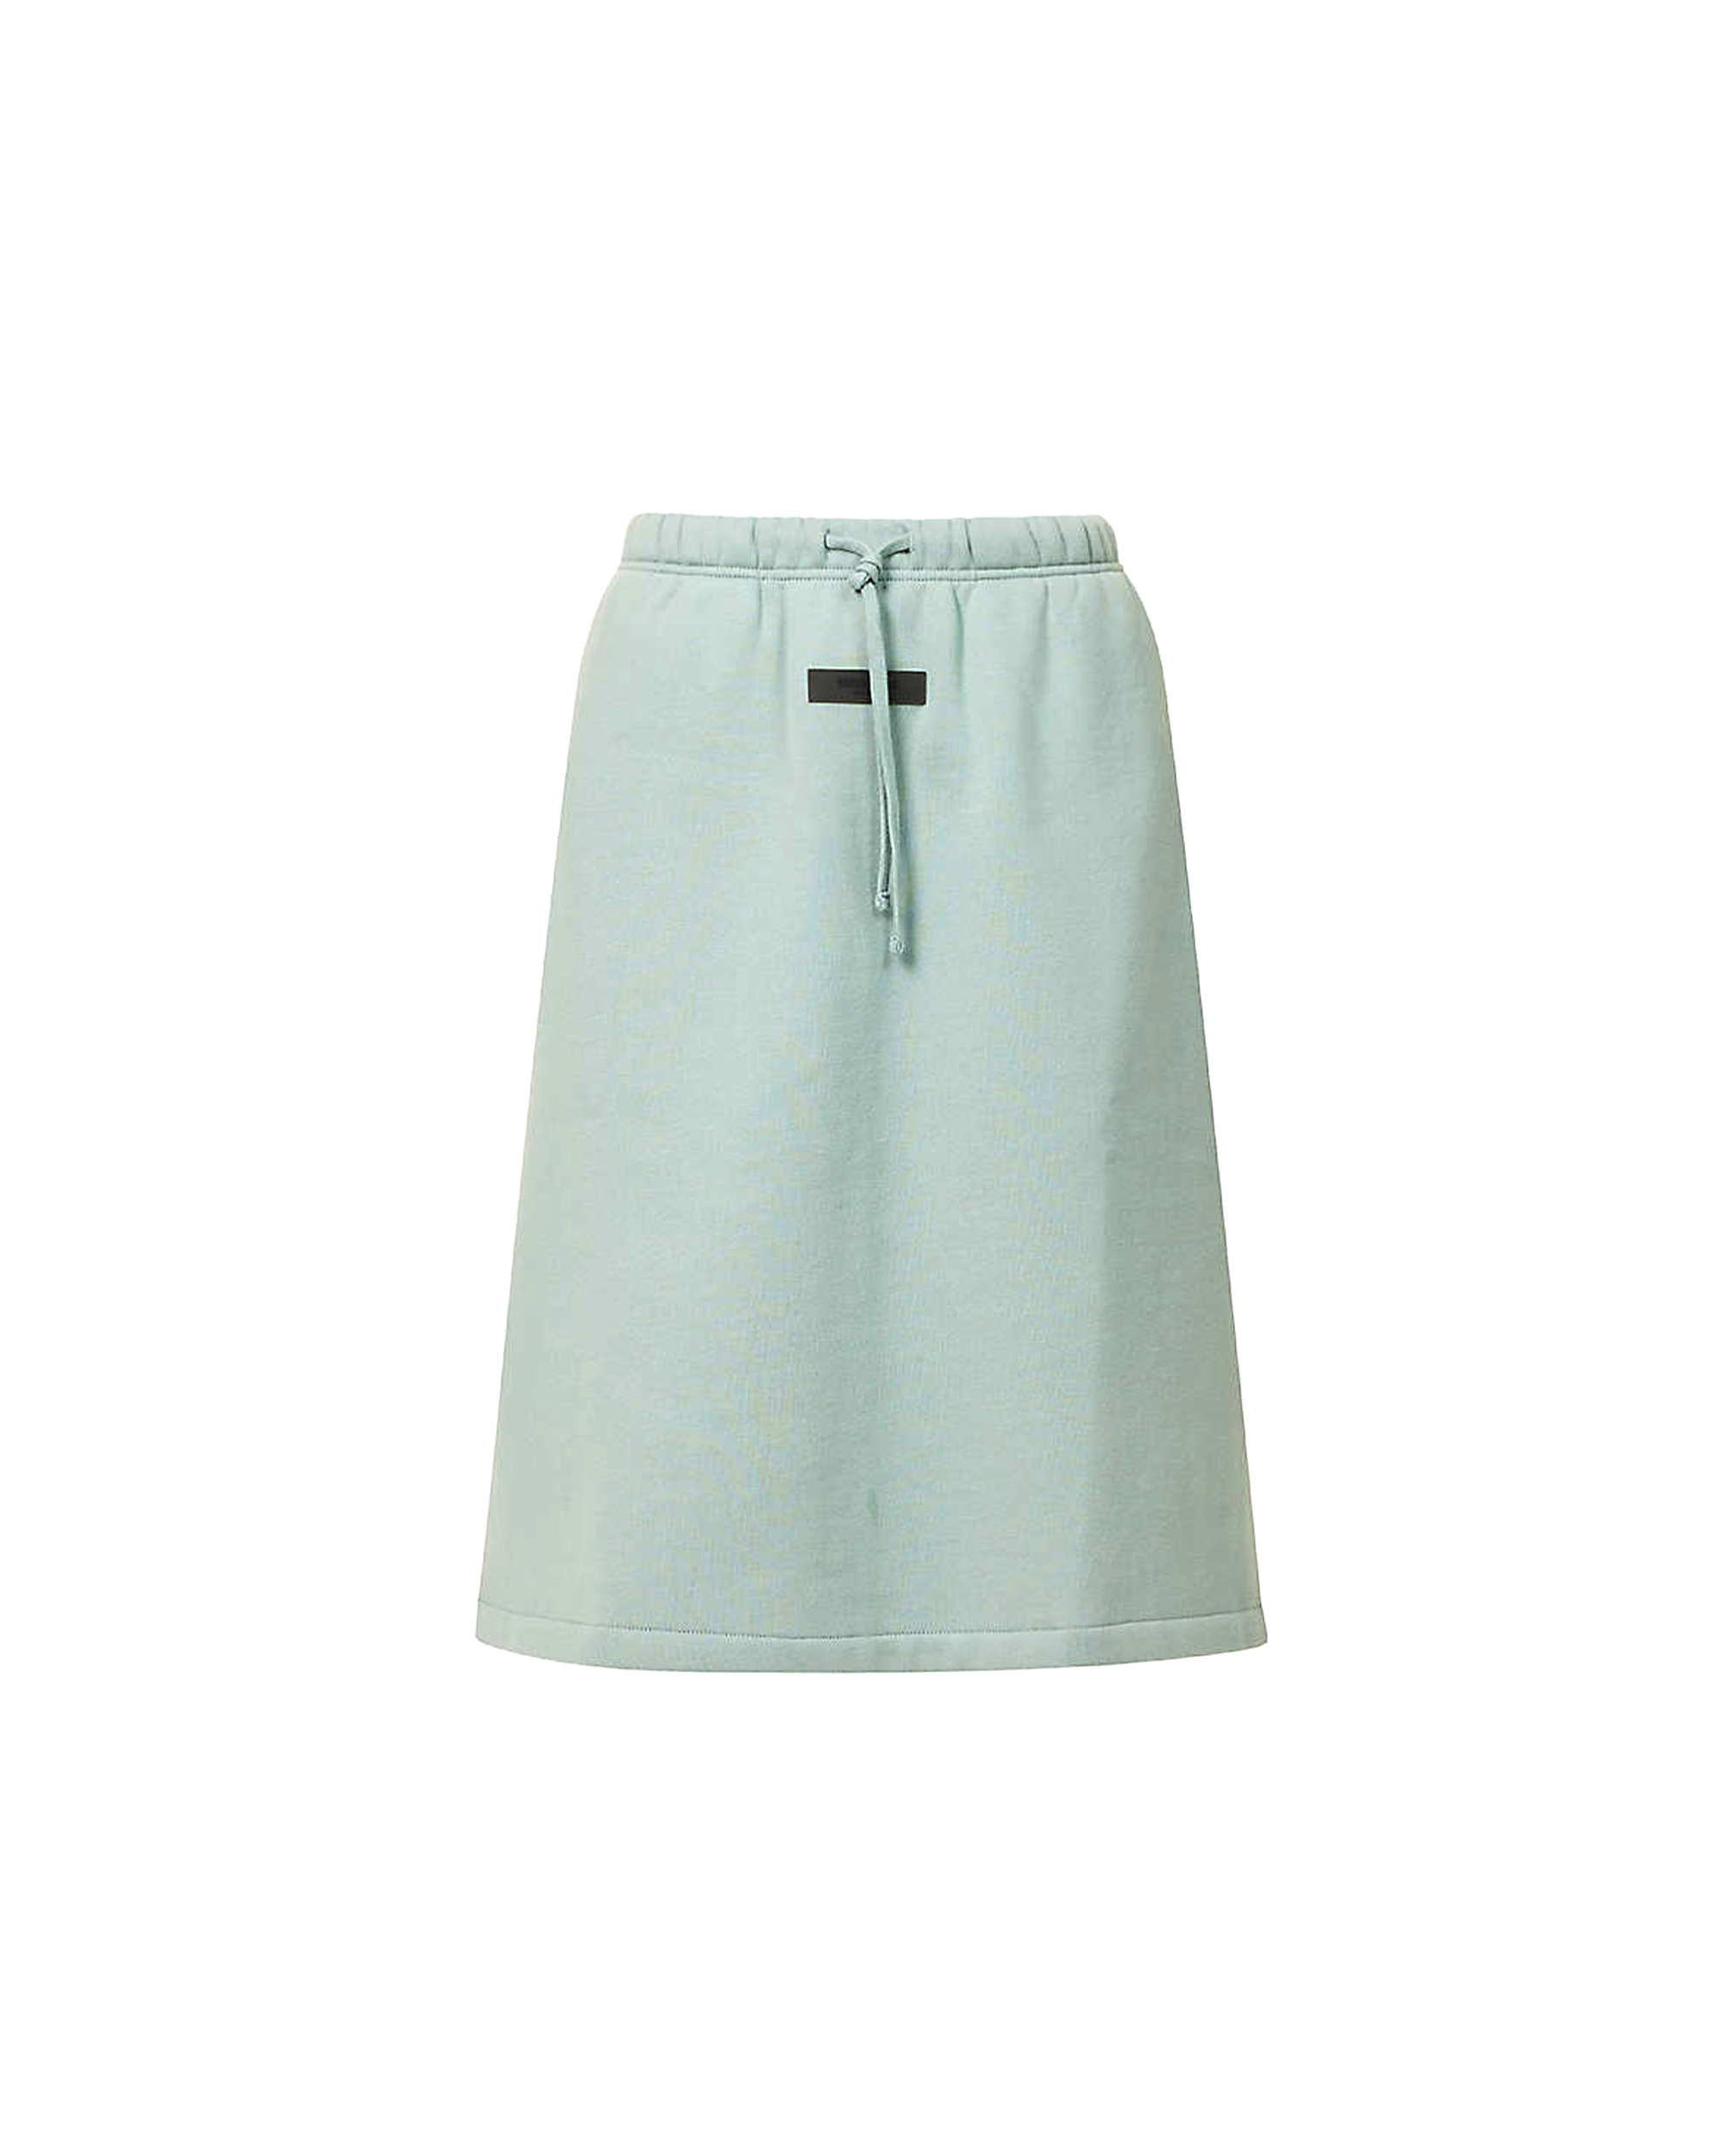 Essentials Short Skirt - Sycamore